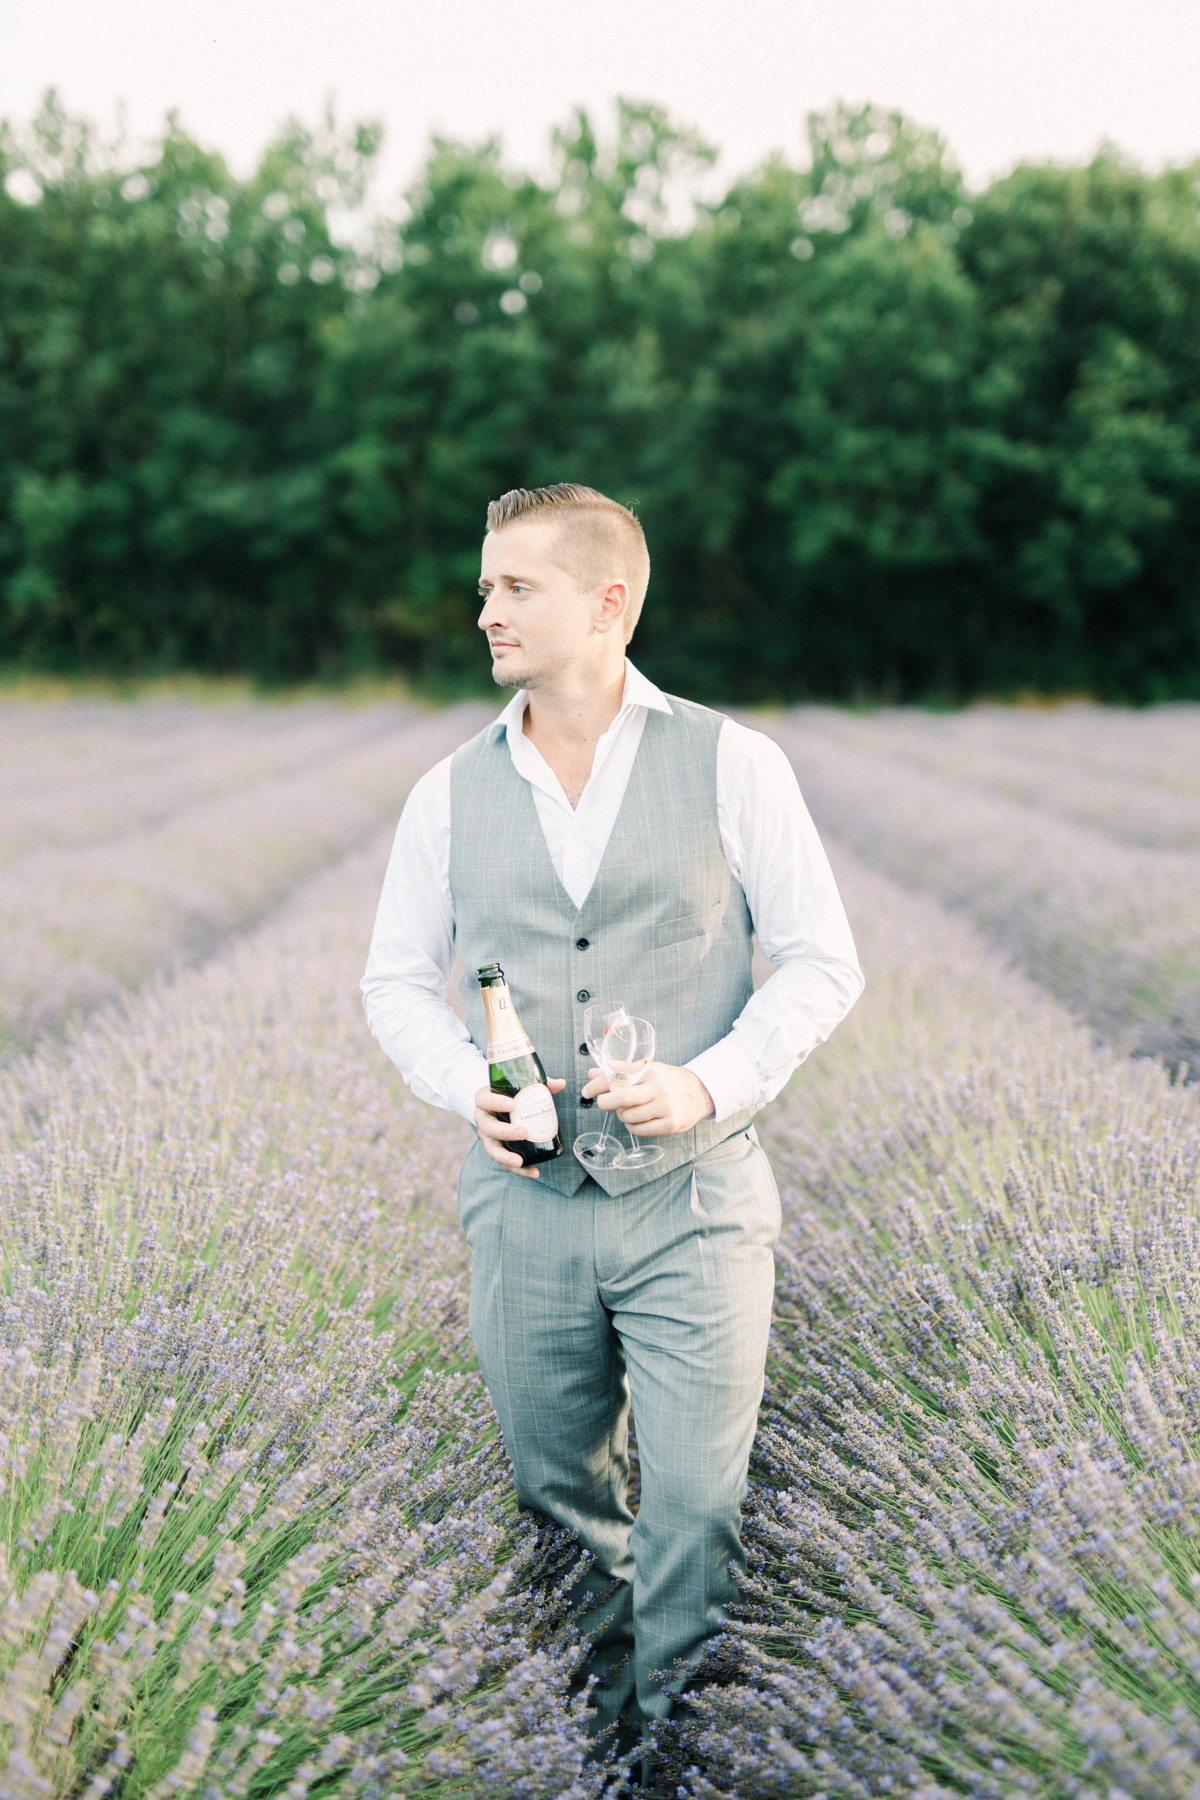 Provence Lavender field engagement photos by Jeremie Hkb